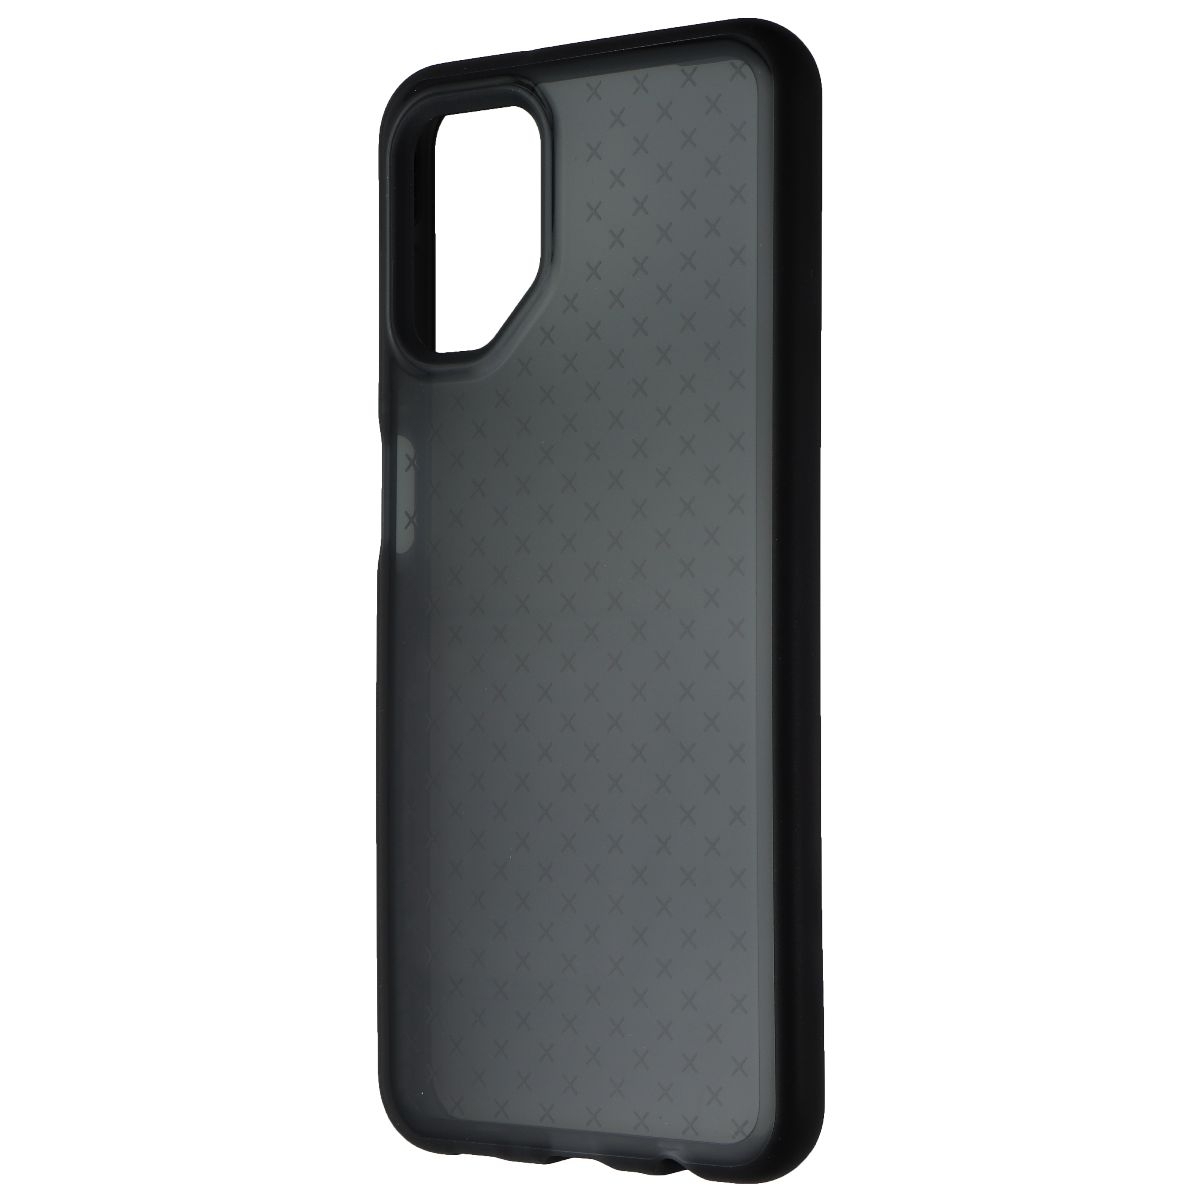 Tech21 Evo Check Series Case For Samsung Galaxy A12 - Black (Refurbished)